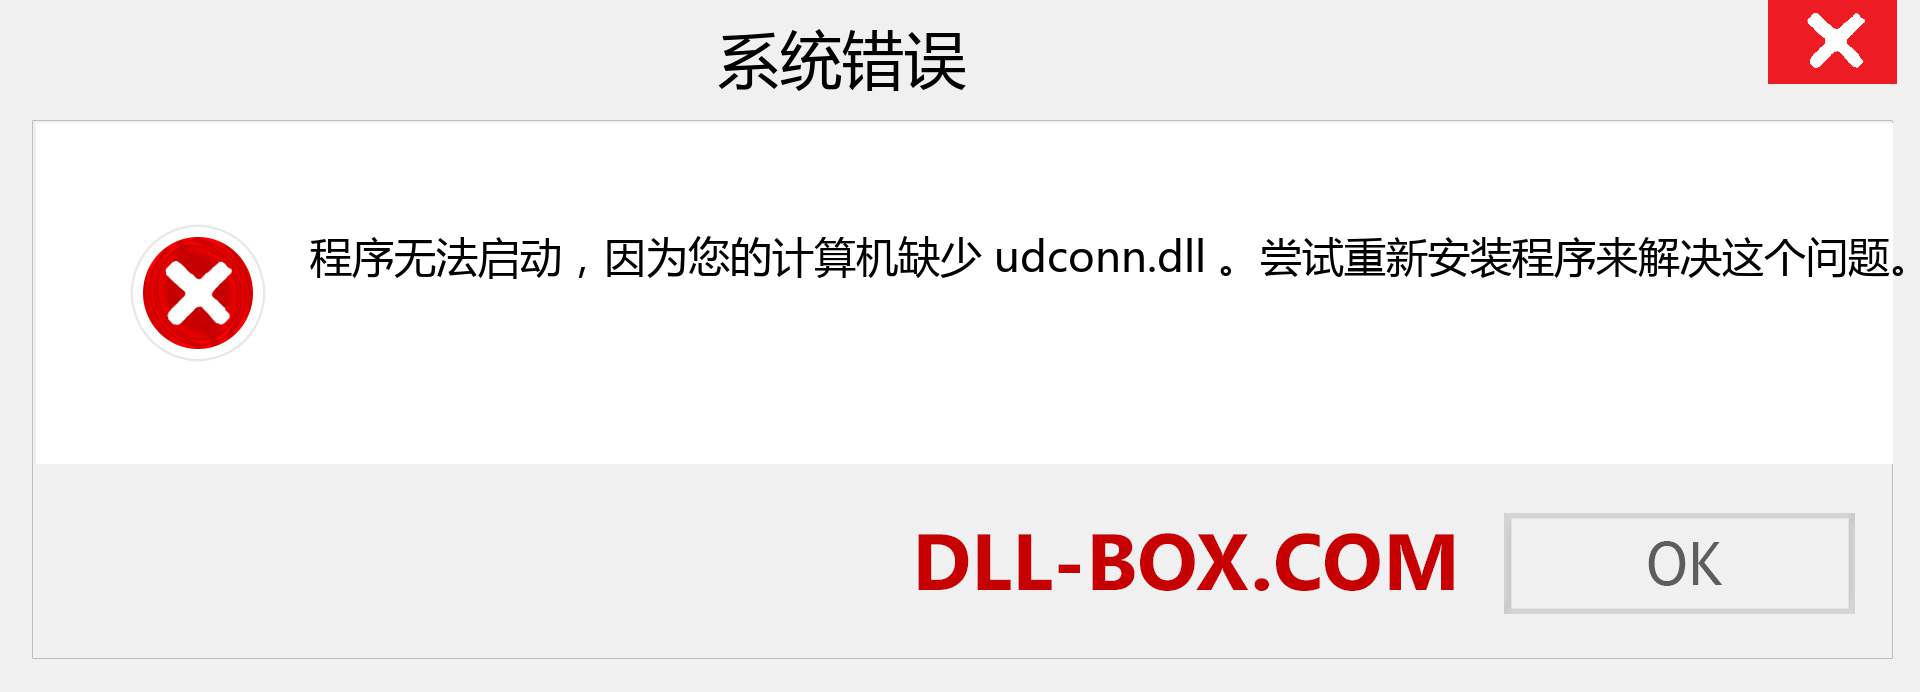 udconn.dll 文件丢失？。 适用于 Windows 7、8、10 的下载 - 修复 Windows、照片、图像上的 udconn dll 丢失错误